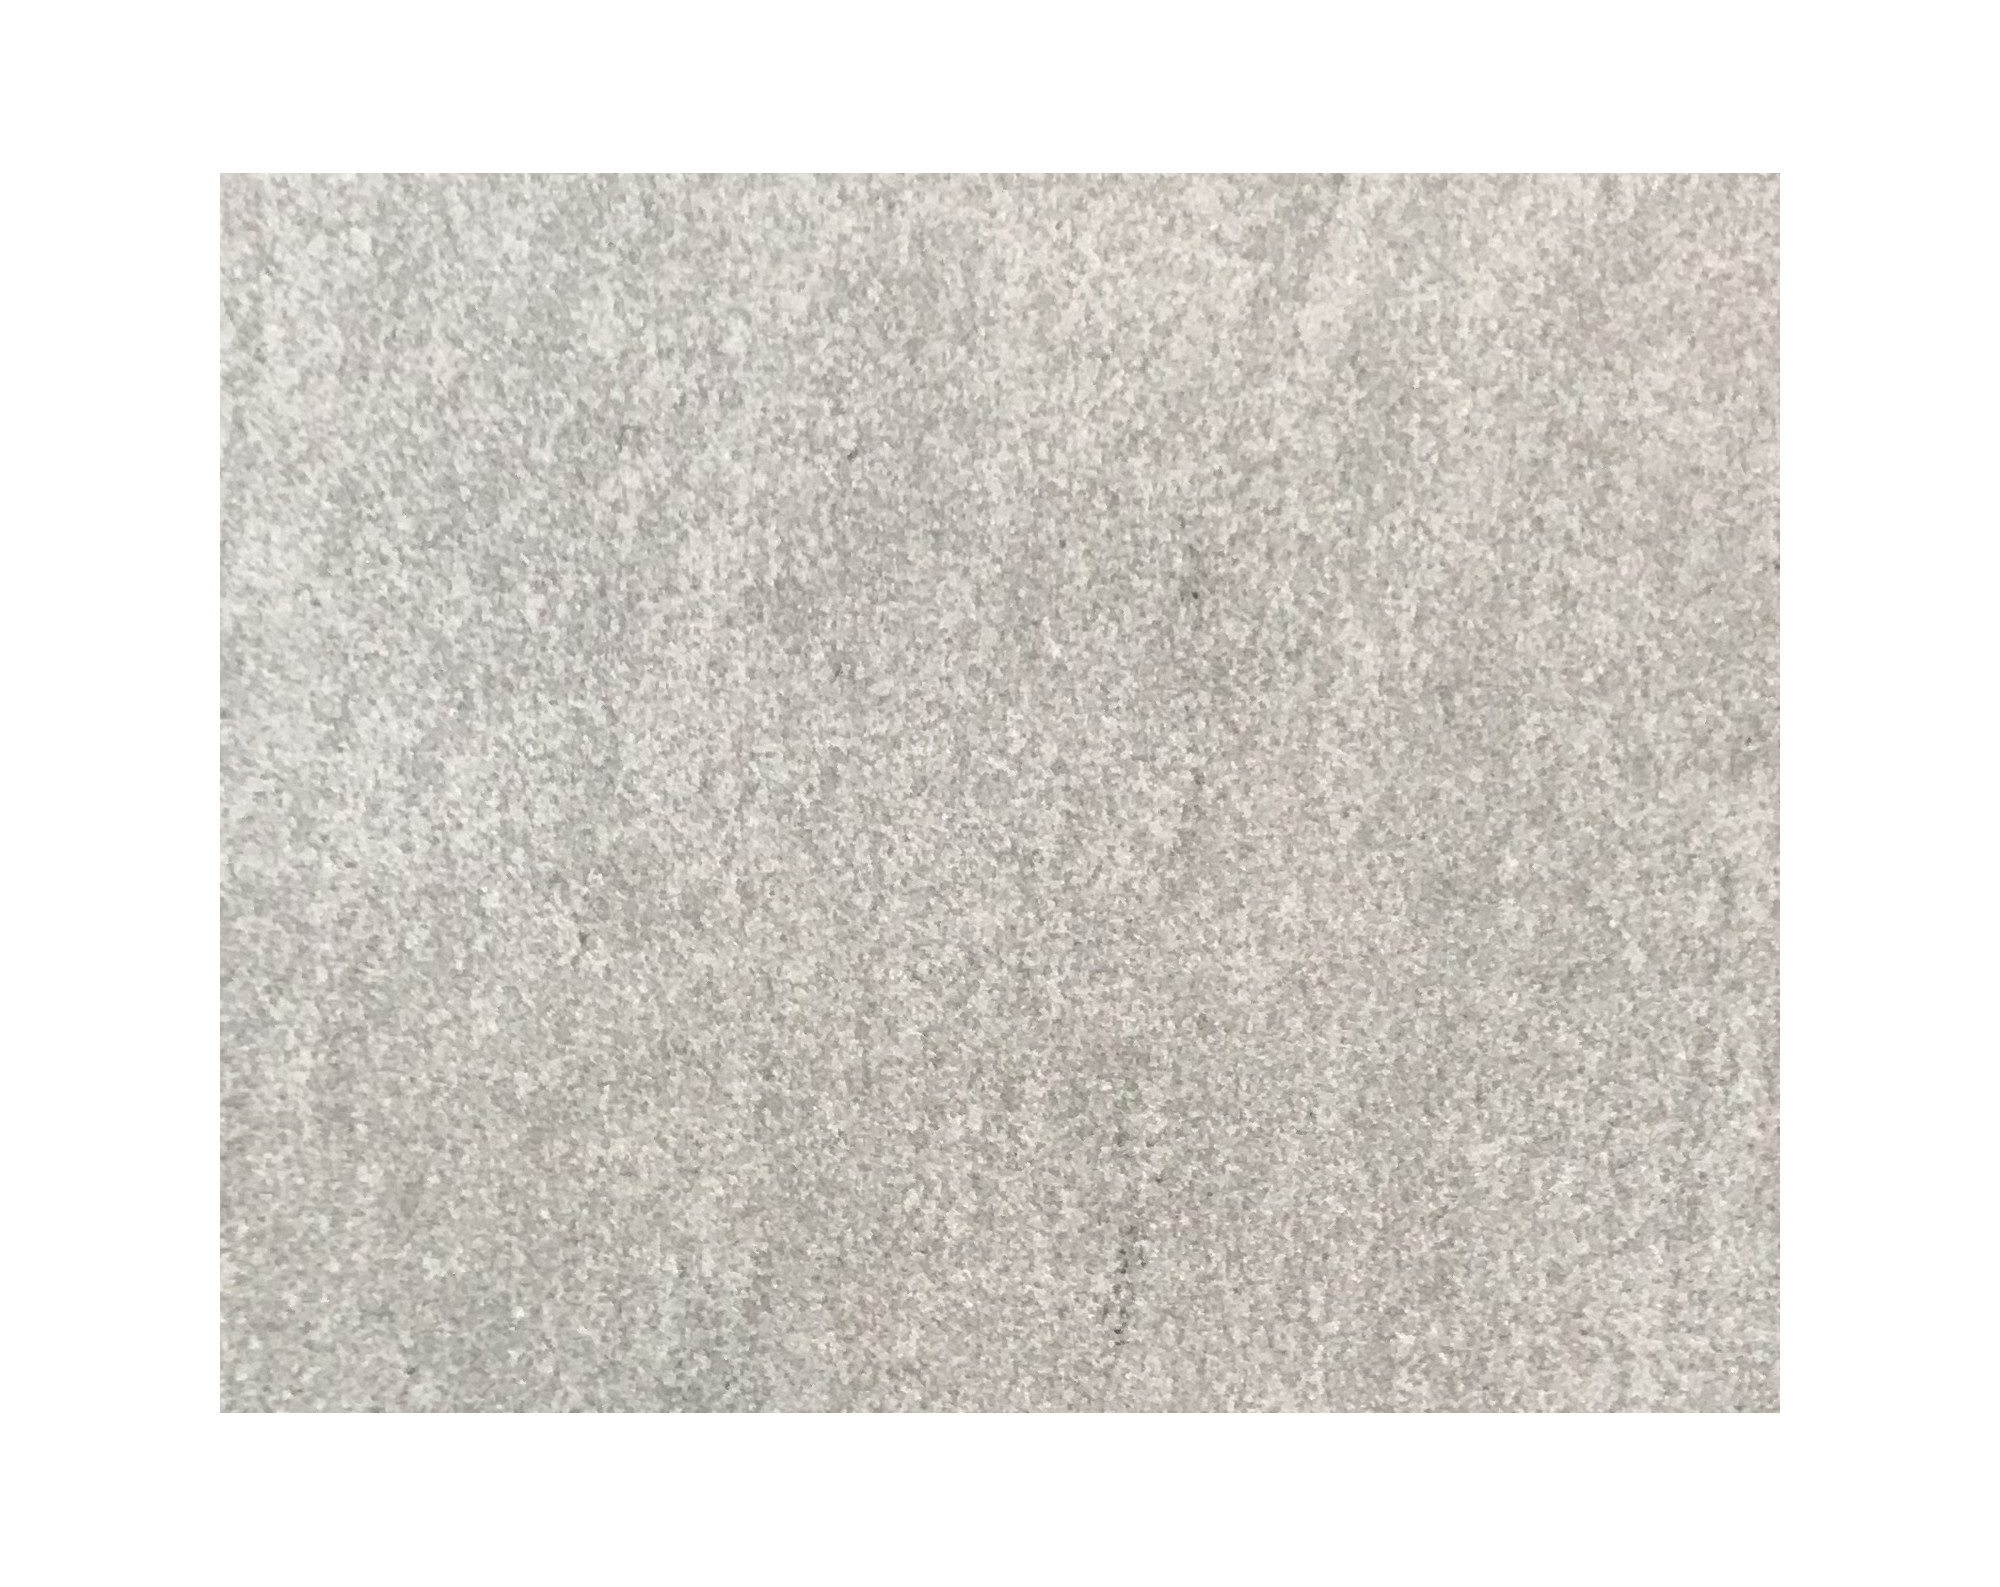 Harmo roc maranelloset, keramiek-serie, ovaal d: 6,00mx12,60m, zand grijs, keramisch porselein